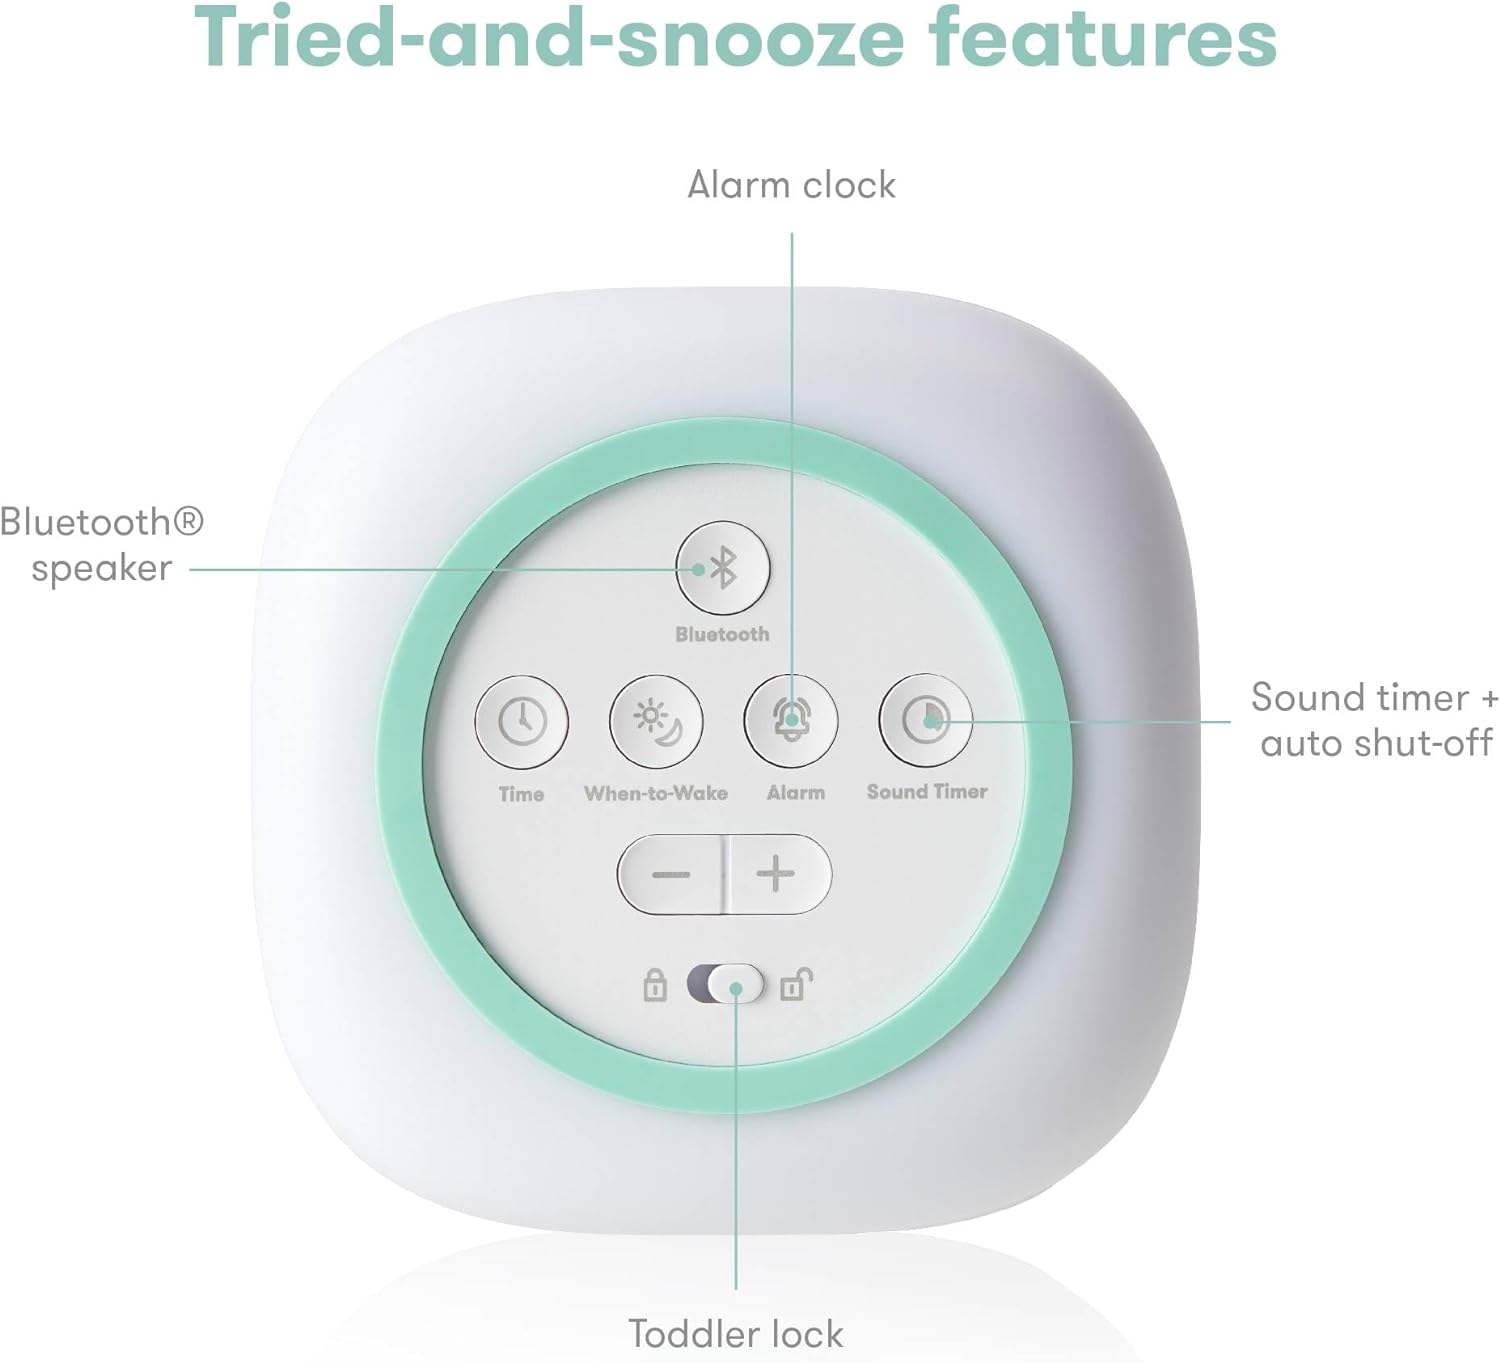 Frida Baby 3-in-1 Alarm Clock, Sound Machine & Nightlight